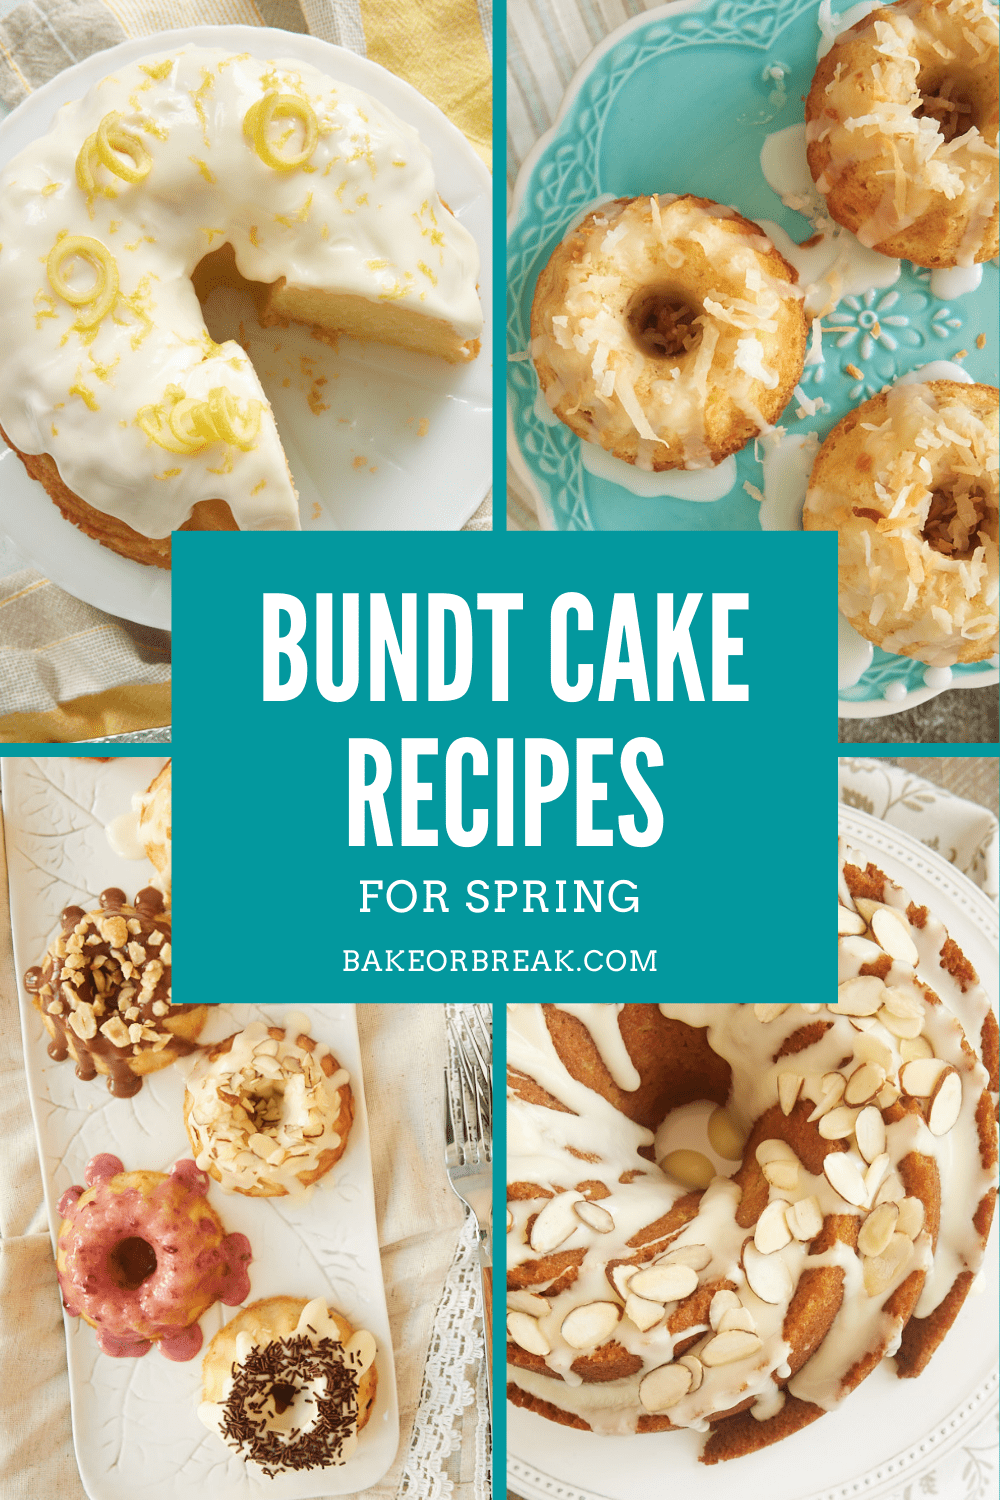 Bundt Cake Recipes for Spring bakeorbreak.com